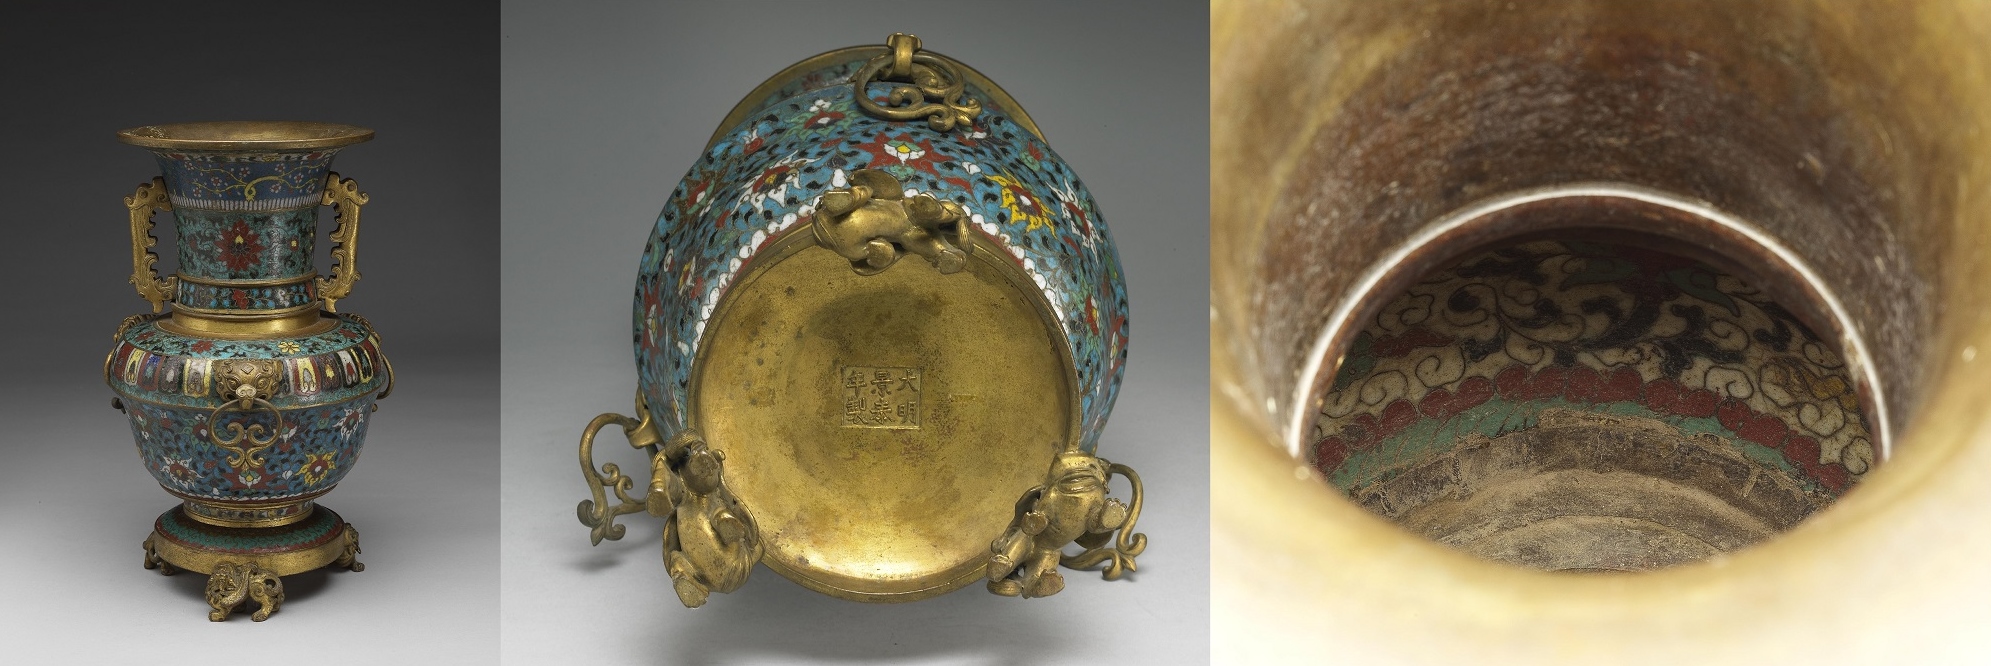 Cloisonné enamel hu-zun vessel with lotus motif and Jingtai mark